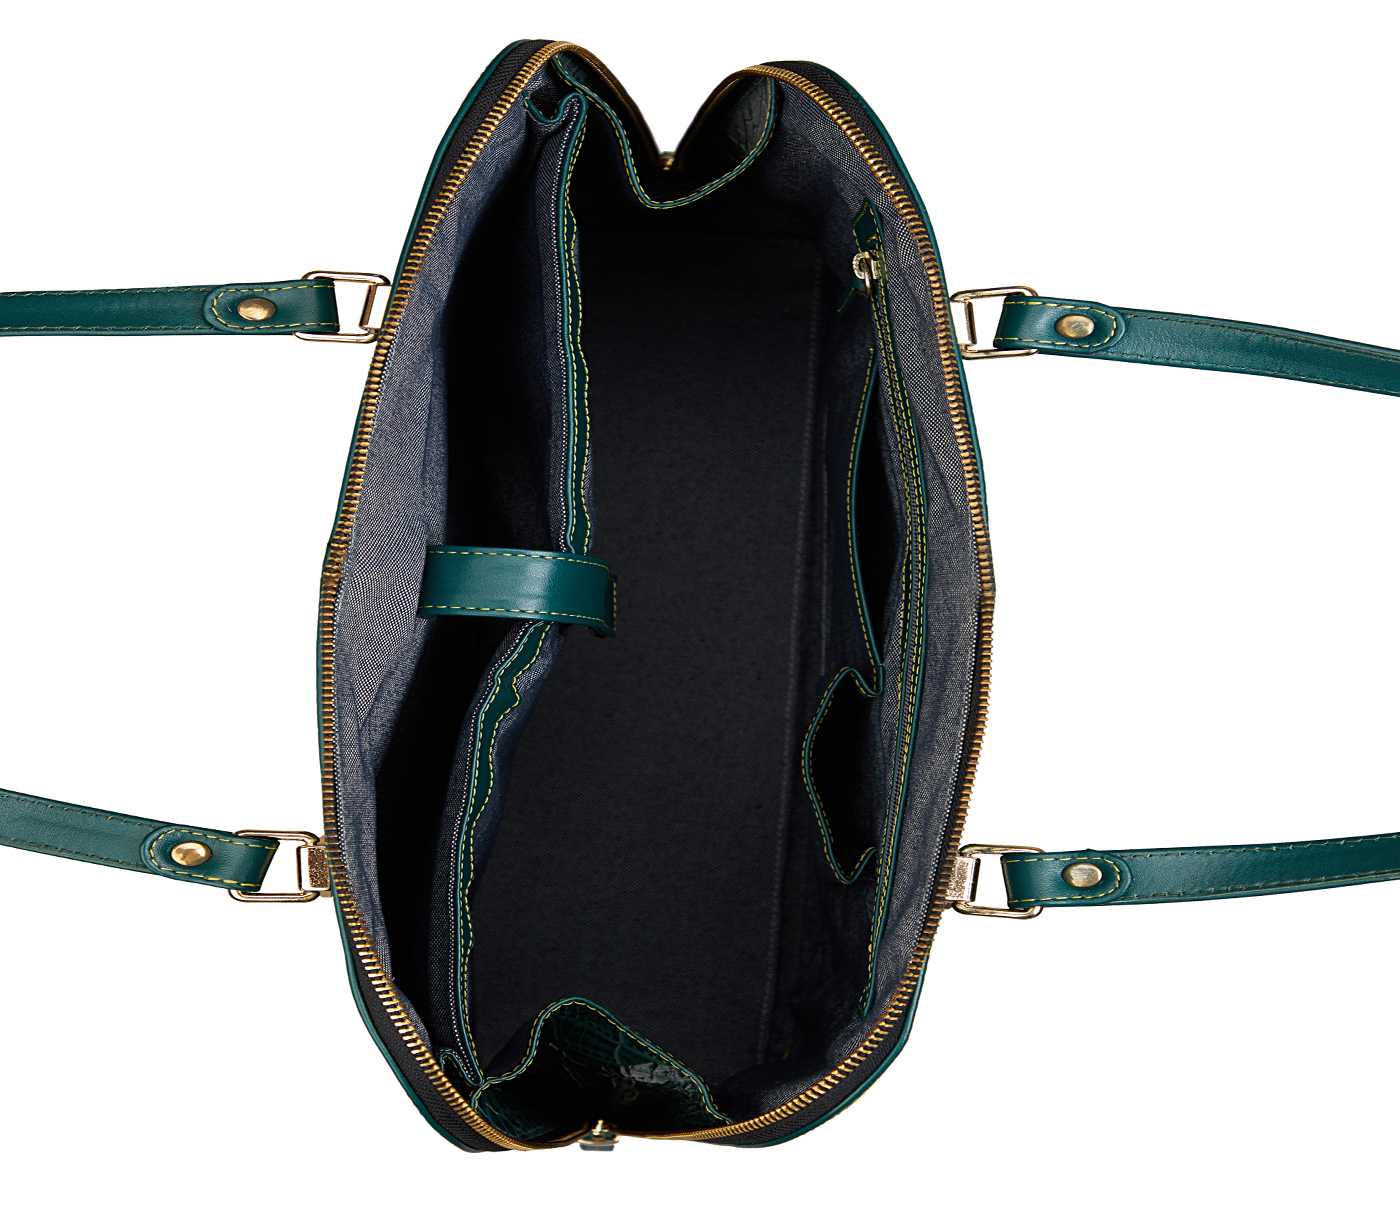 B858-Estrella-Shoulder Work Bag in Genuine Leather - Green